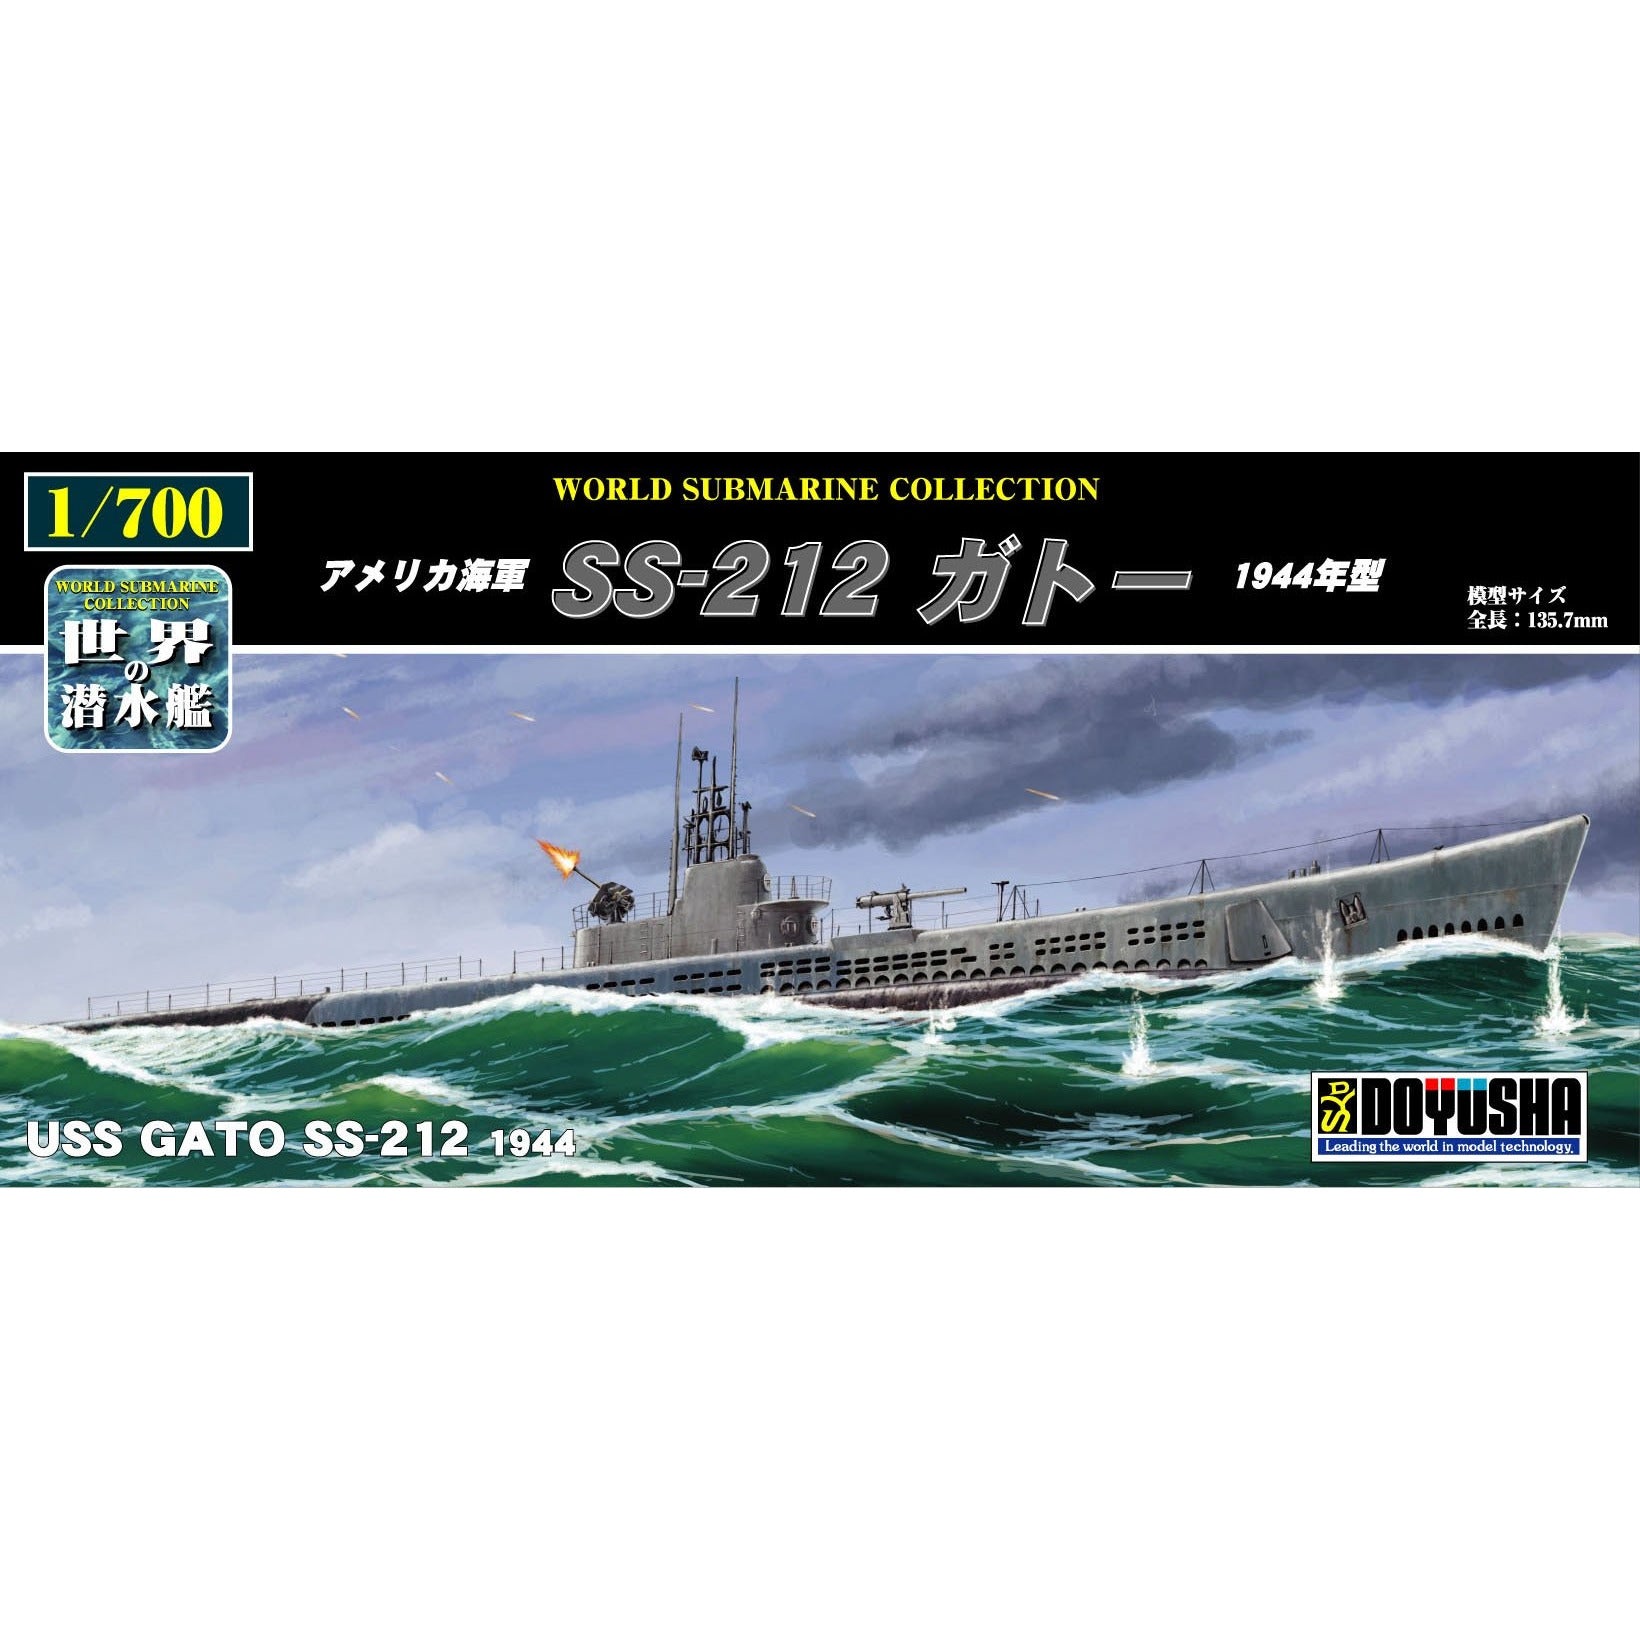 USS Gato SS-212 1944 1/700 Model Submarine Kit #800-13 by Doyusha